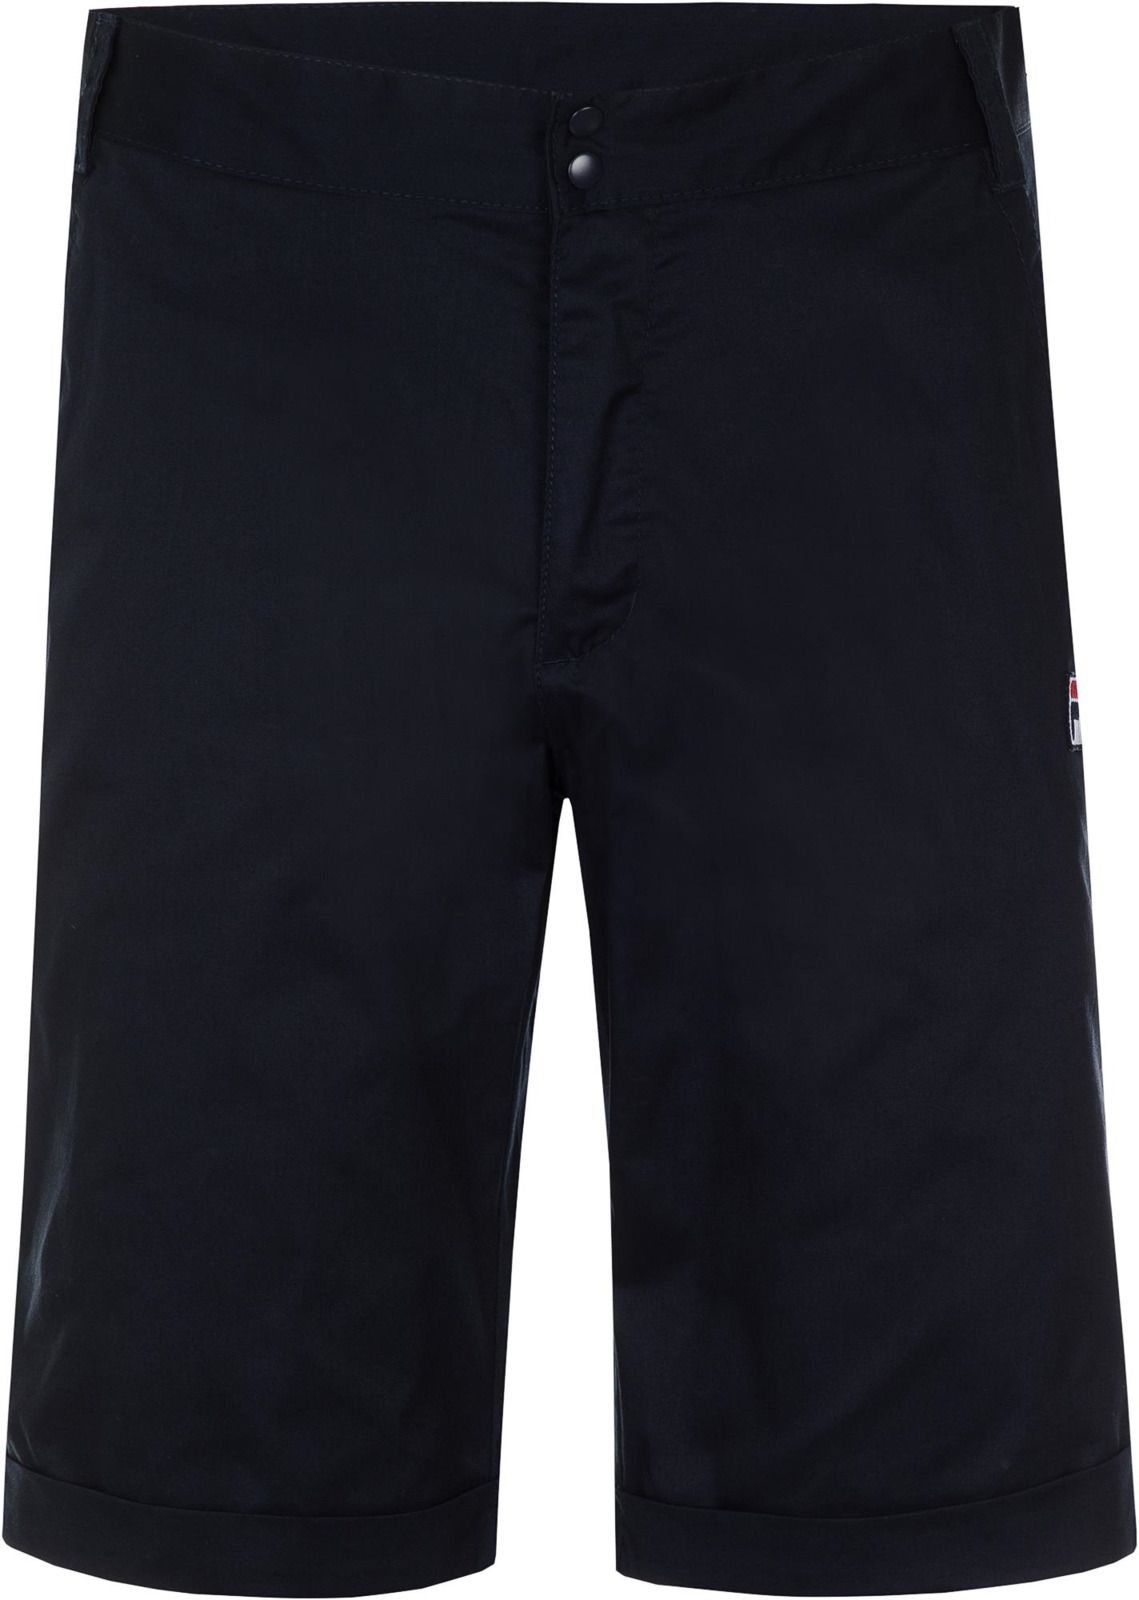   Fila Men's Shorts, : -. 100086-Z4.  2XL (54)